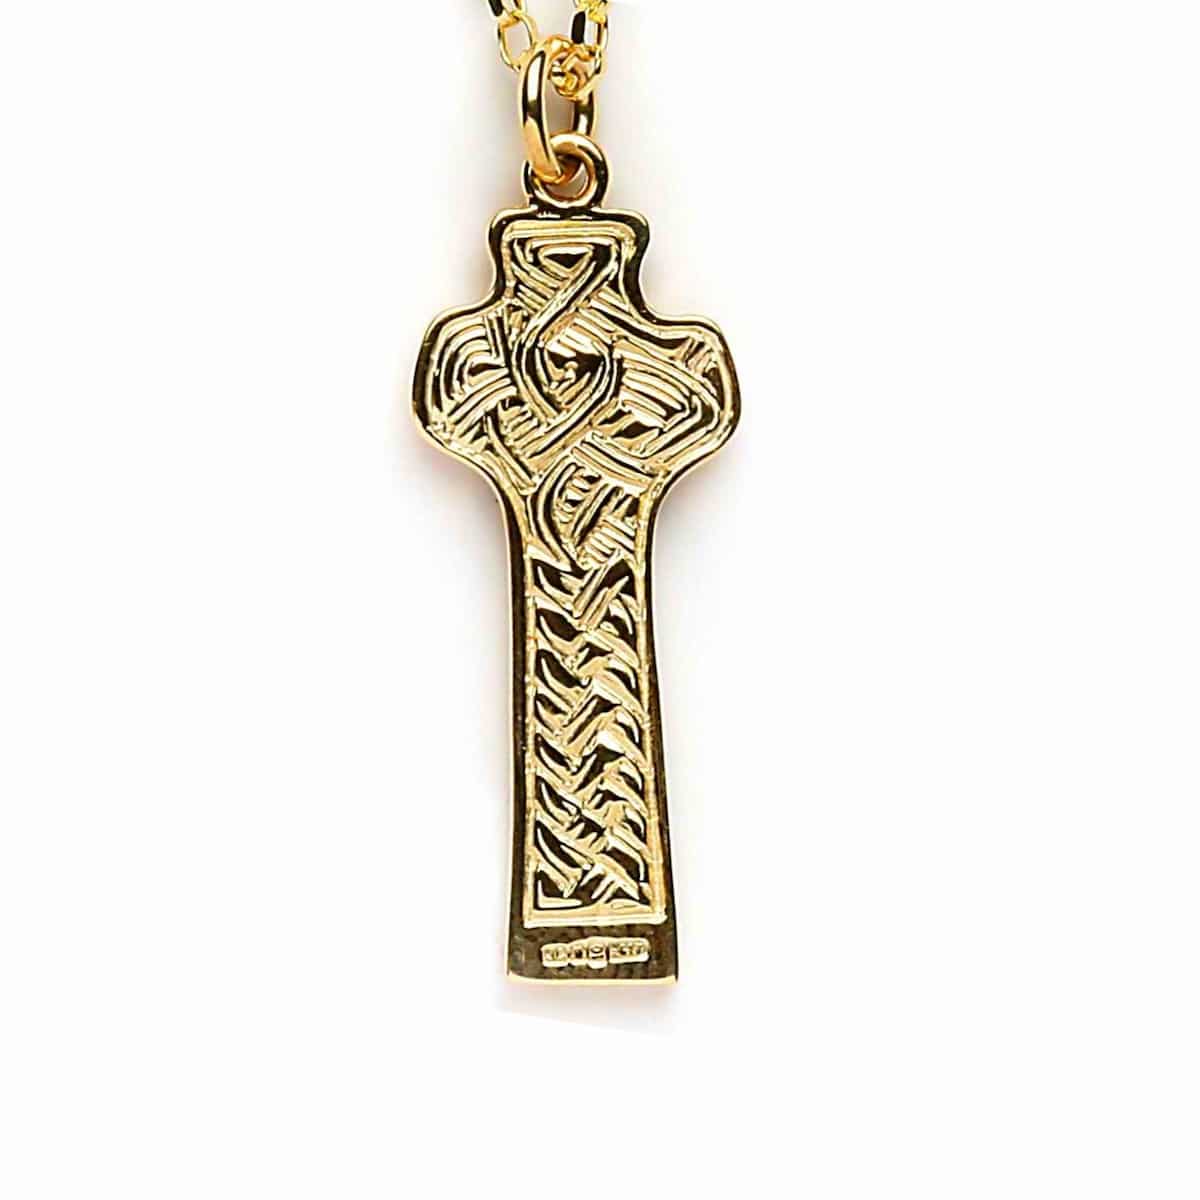 Gold Cross of St. Patrick Carndonagh